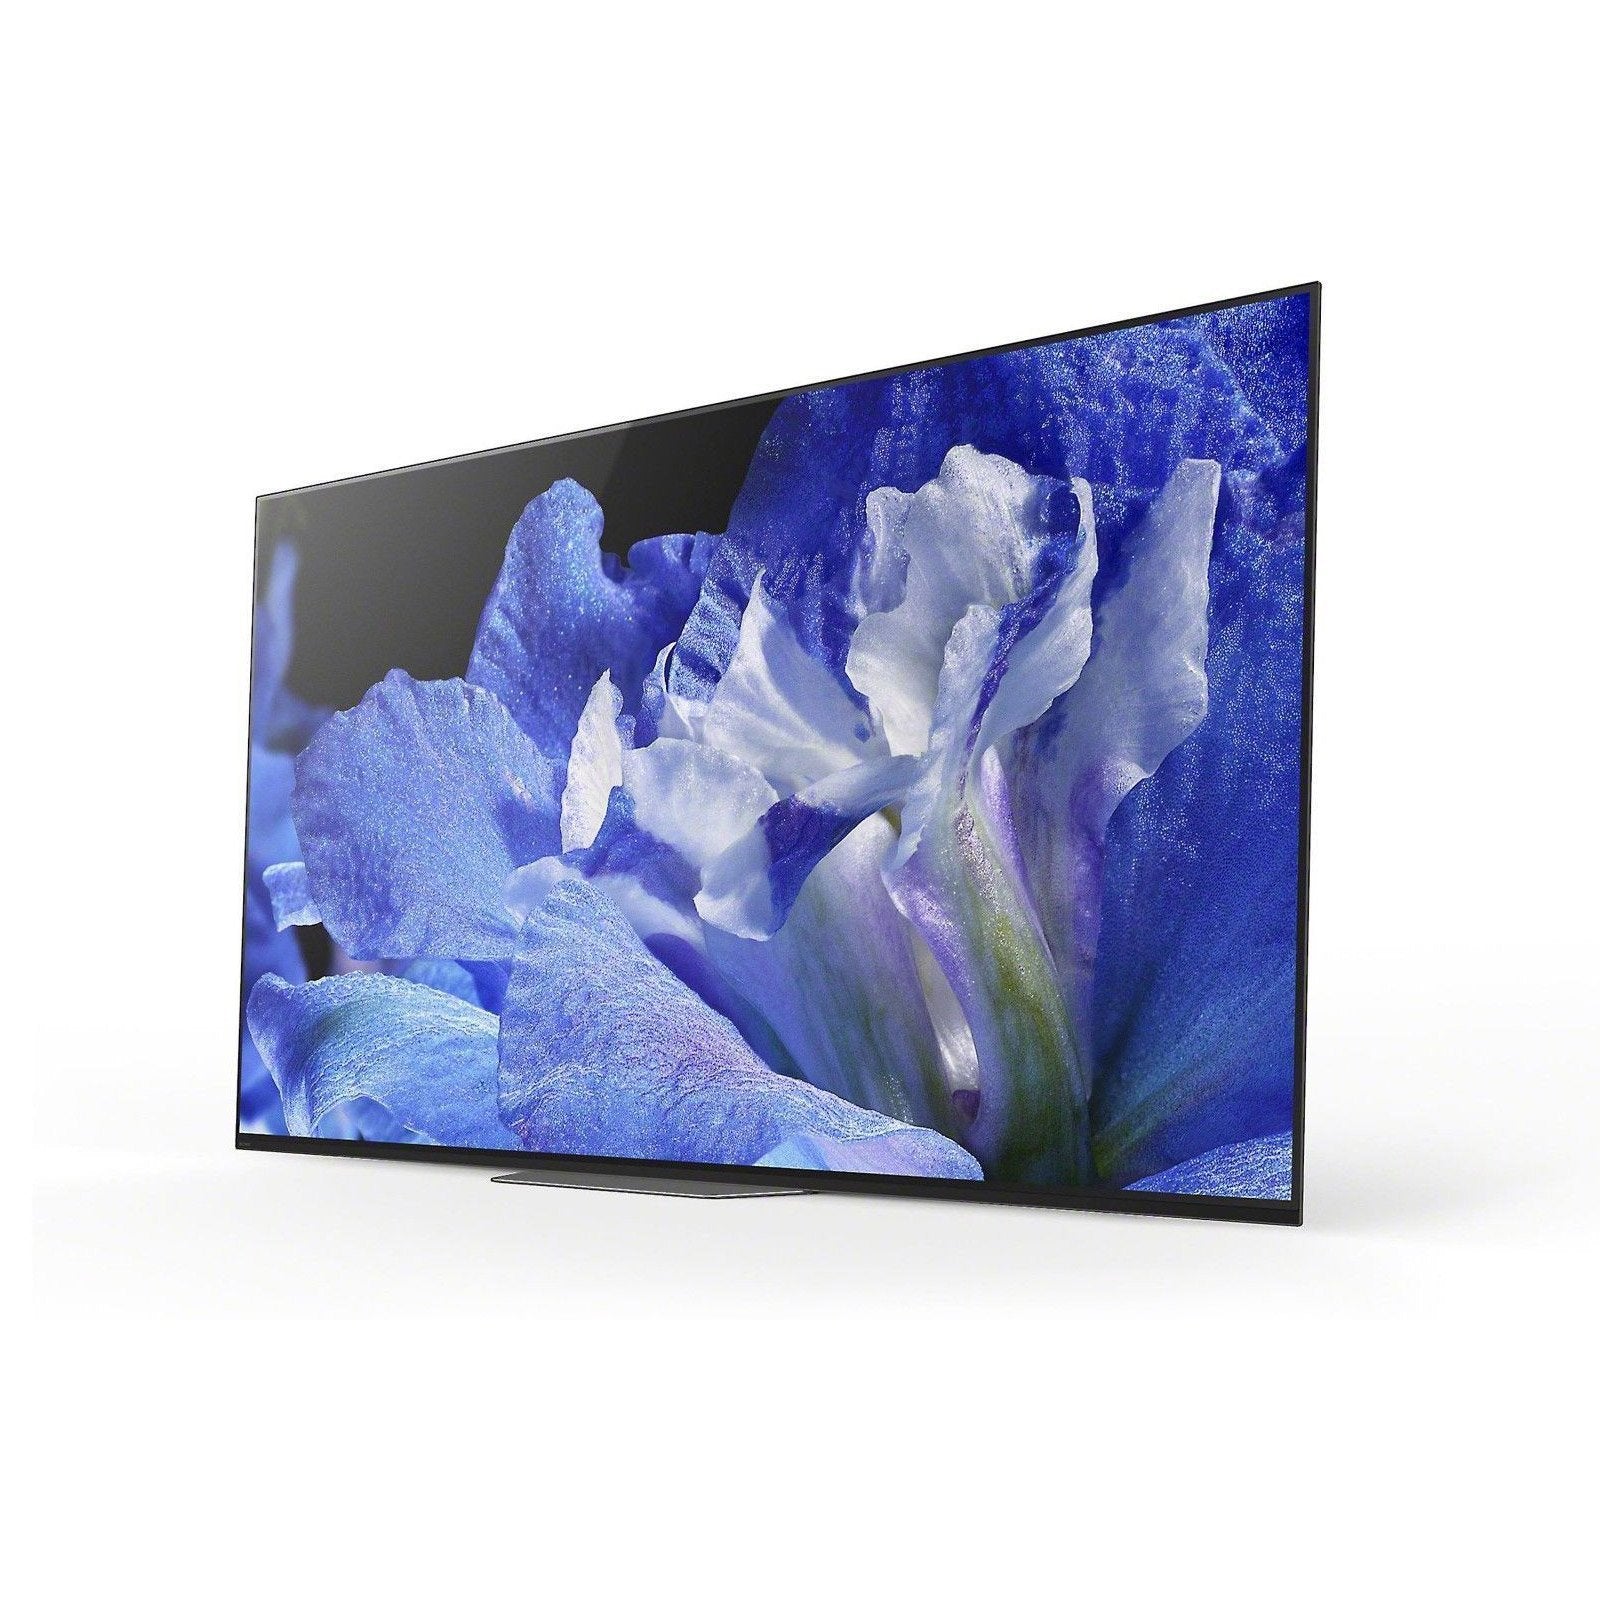 Sony XBR-65A8F 65-Inch 4K Ultra HD Smart BRAVIA OLED TV